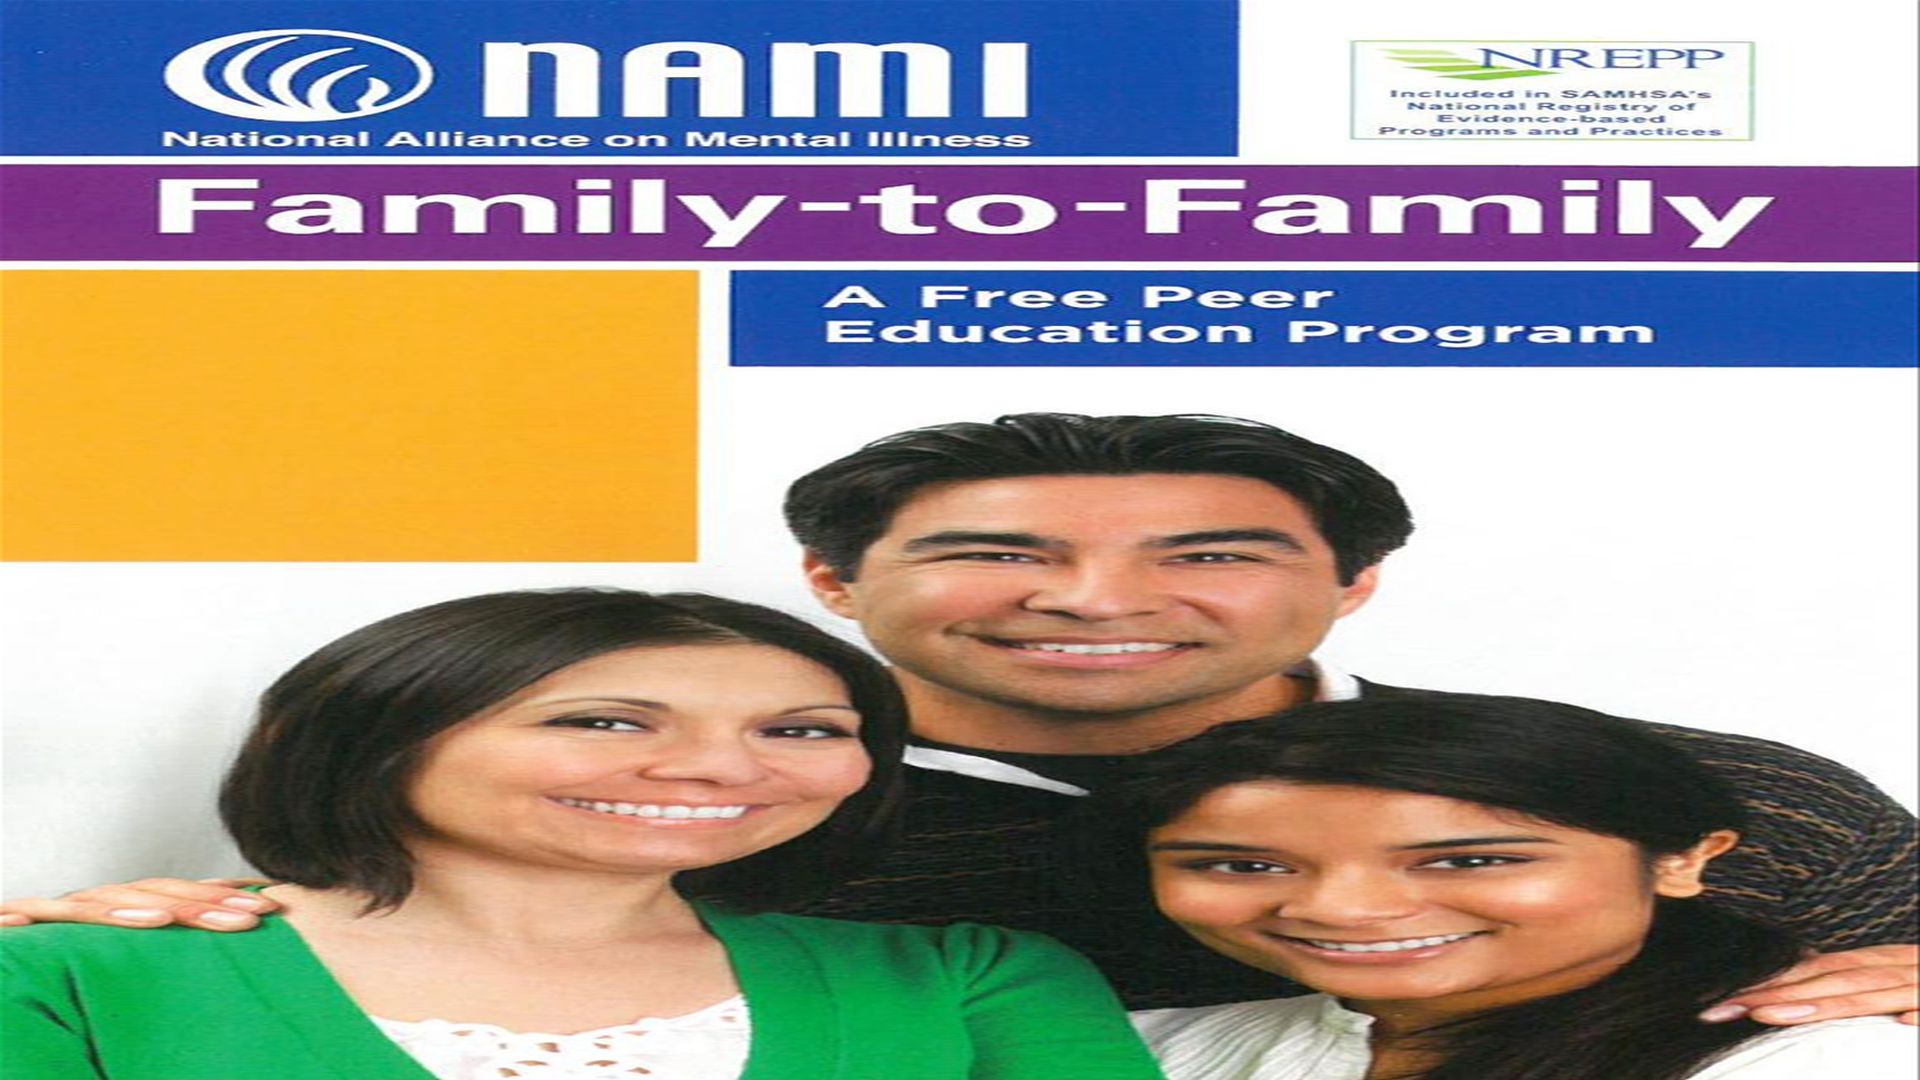 NAMI Family to Family Education Program - Muscatine, Muscatine, Iowa, United States